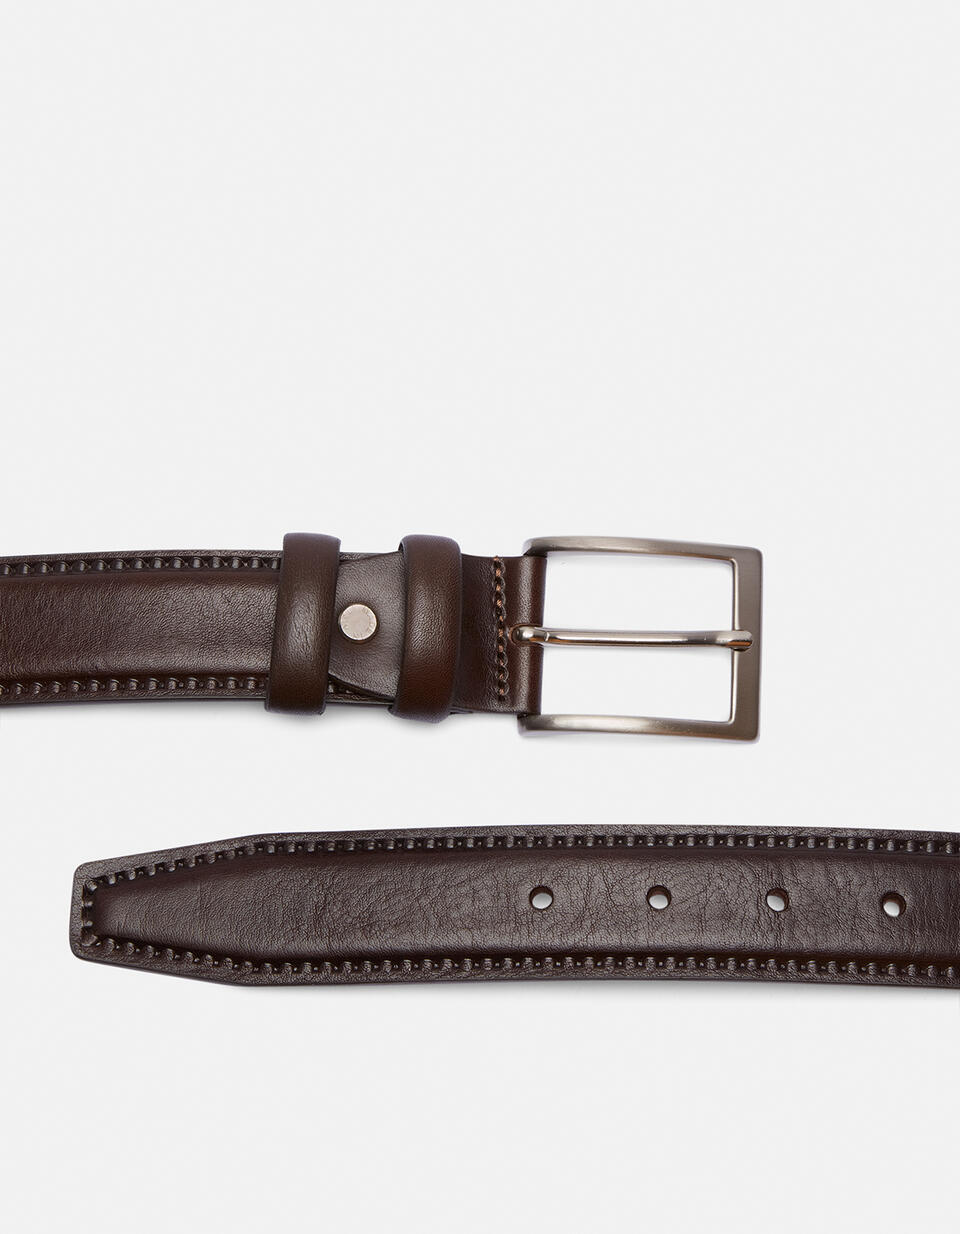 Cintura Classica in pelle con cucitura a contrasto Testa di moro  - Cinture Uomo - Cinture - Cuoieria Fiorentina